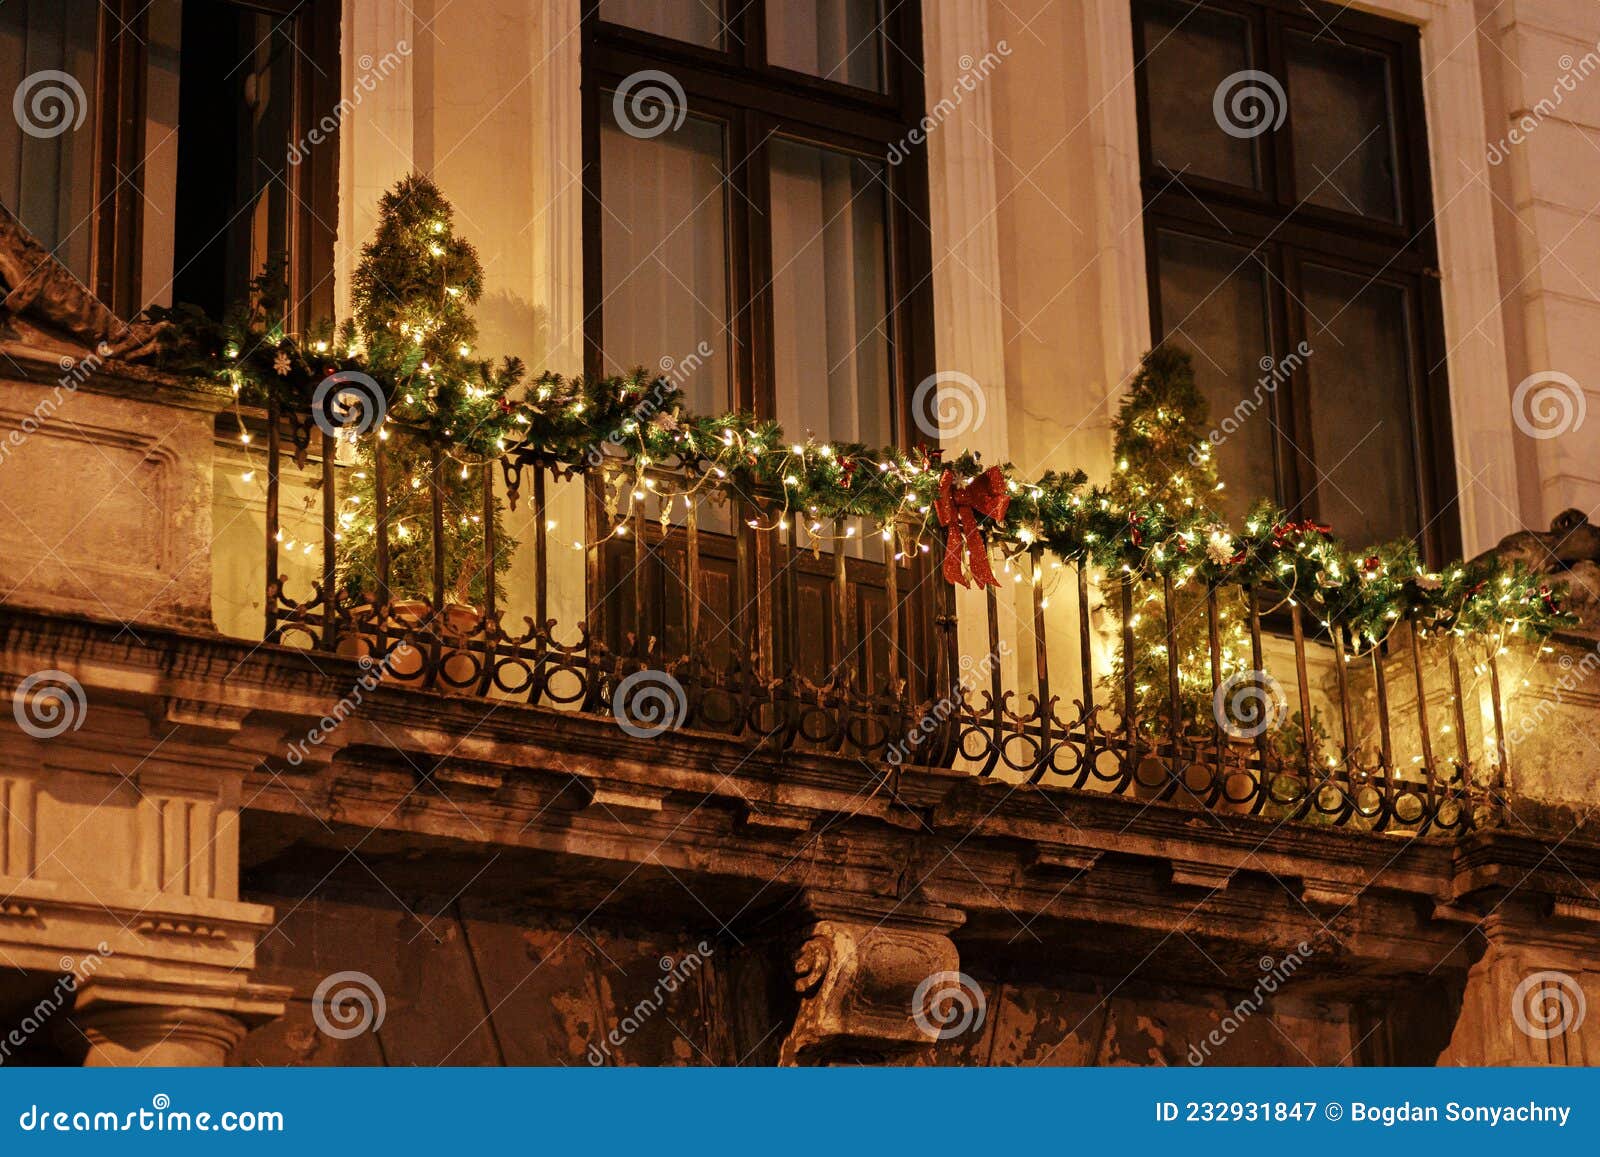 Stylish Christmas Tree, Branches, Ornaments in Lights Illumination ...